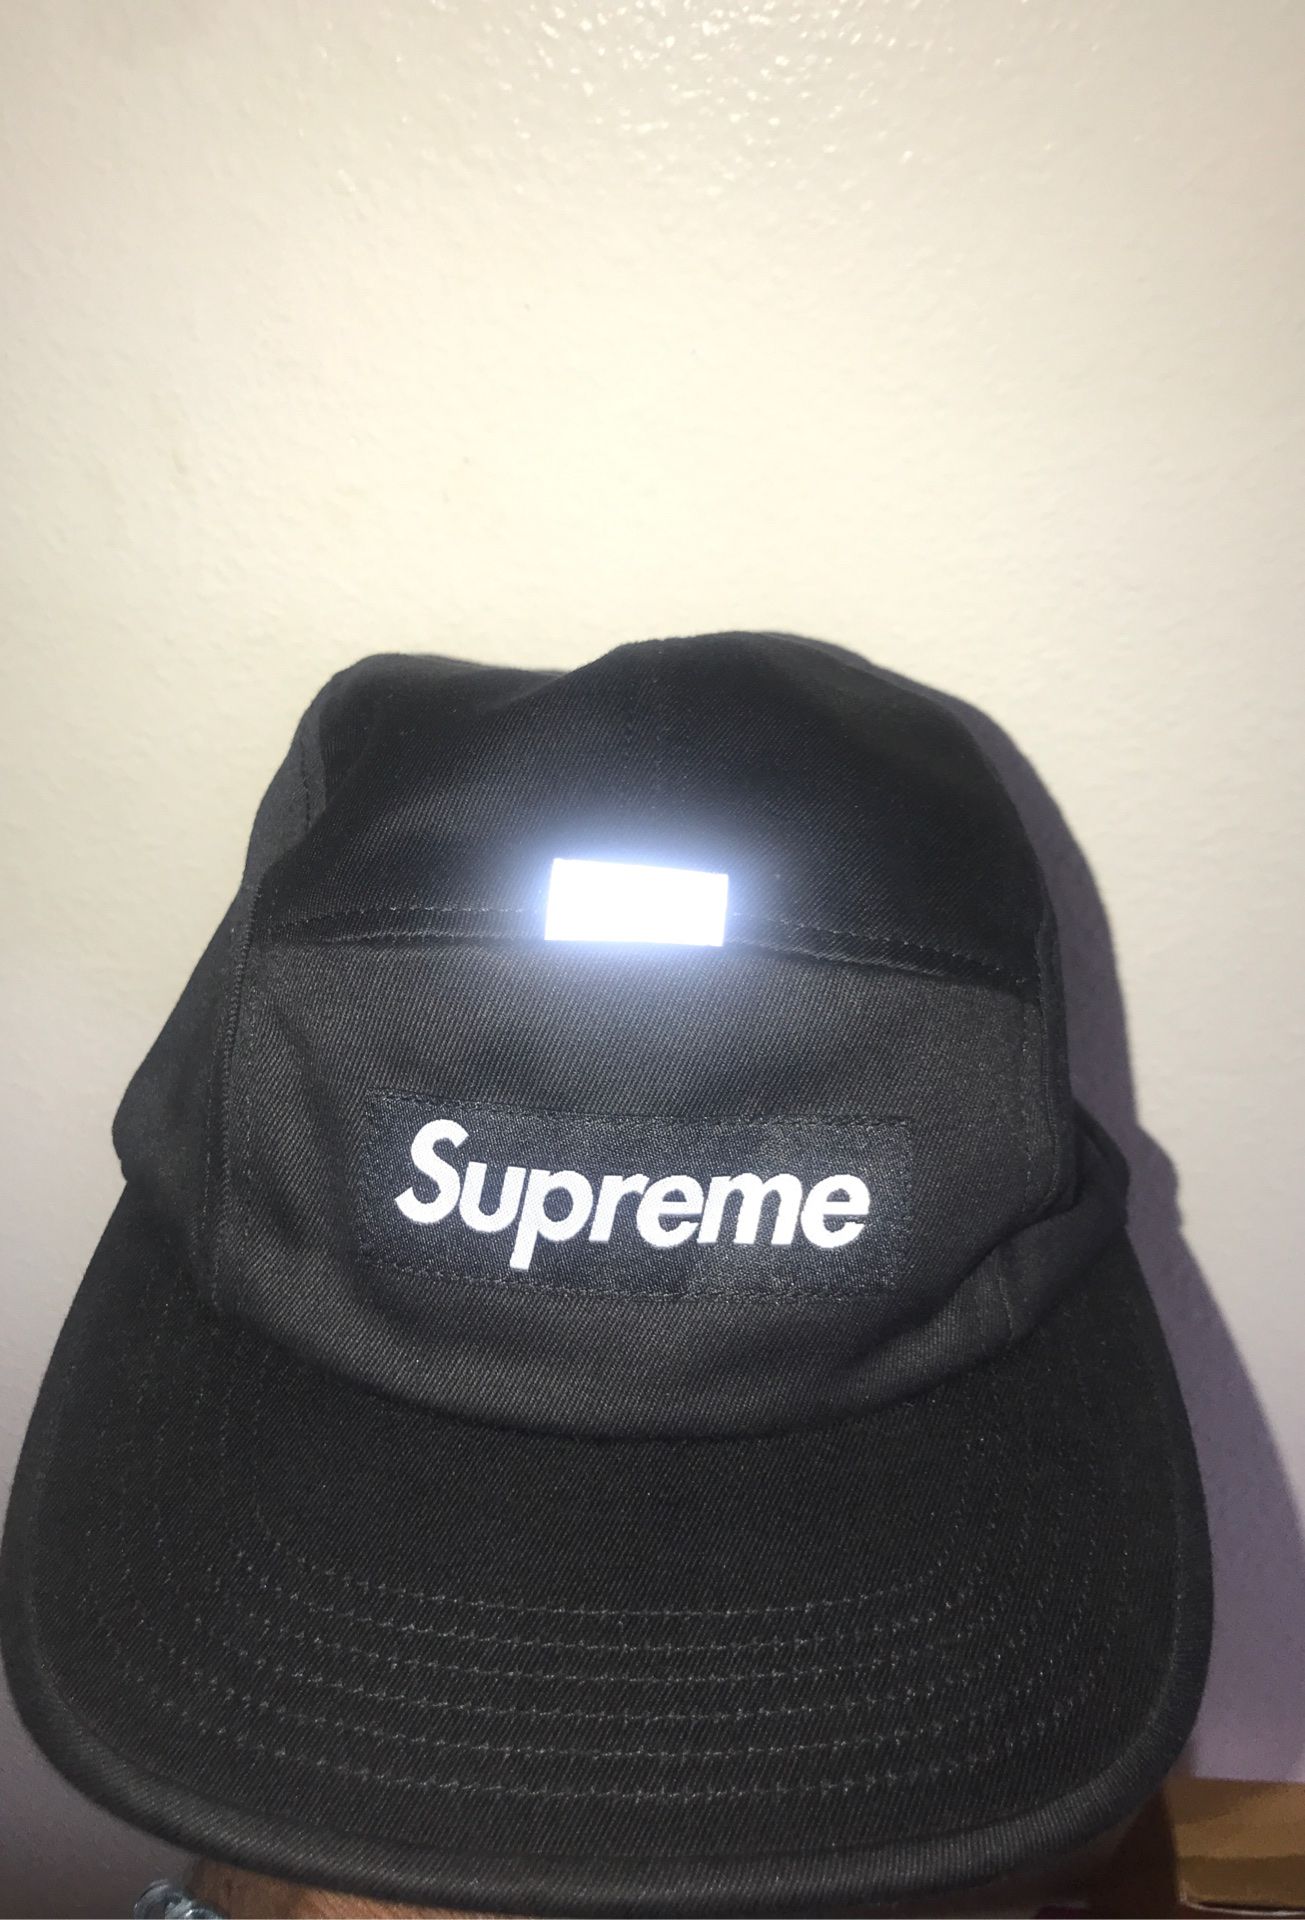 World Famous "Supreme" hat